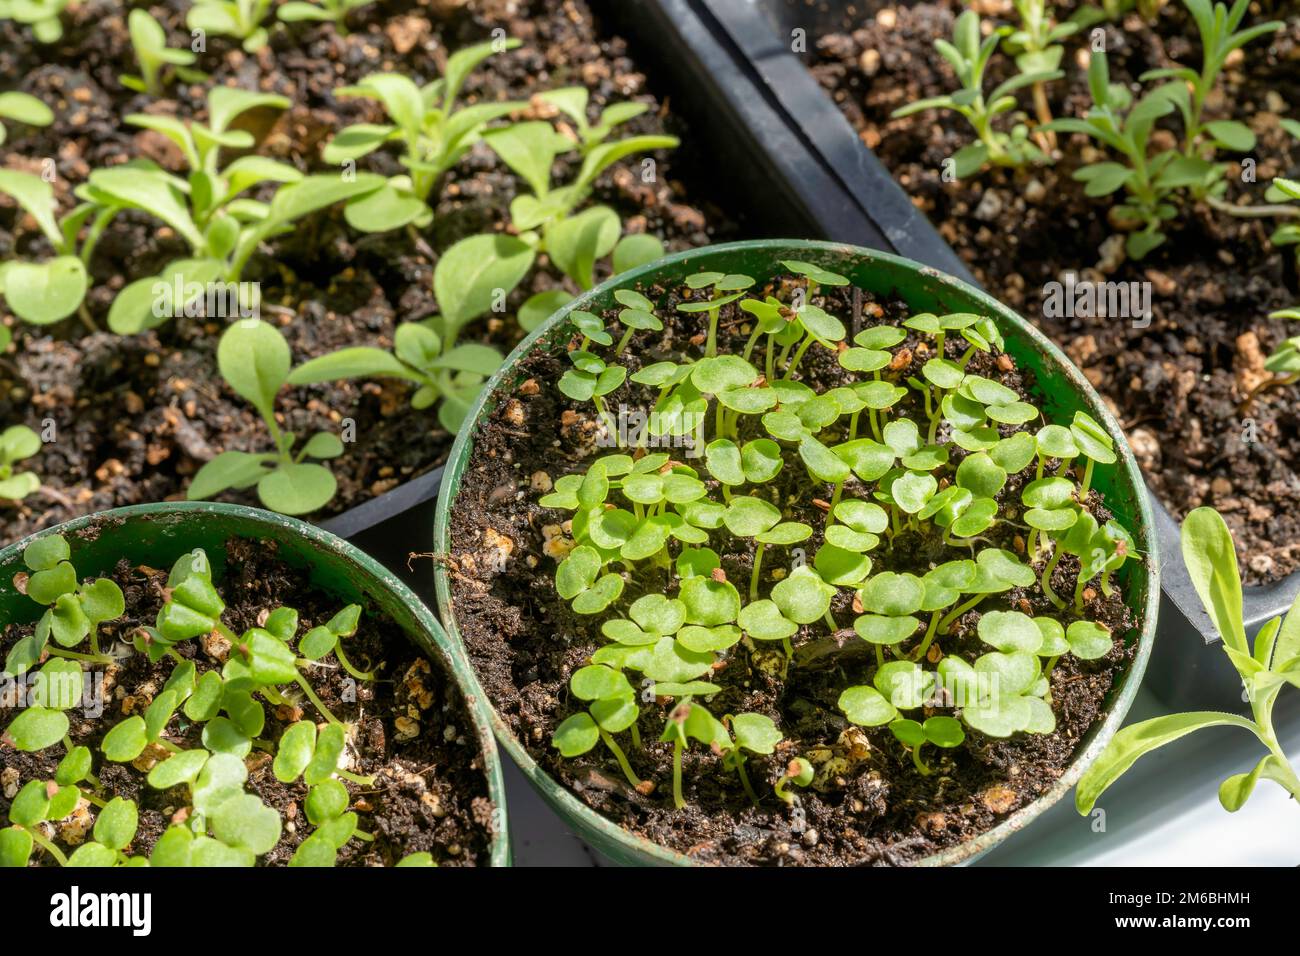 Tiny impatiens seedling ready to transplant into larger pots. Stock Photo